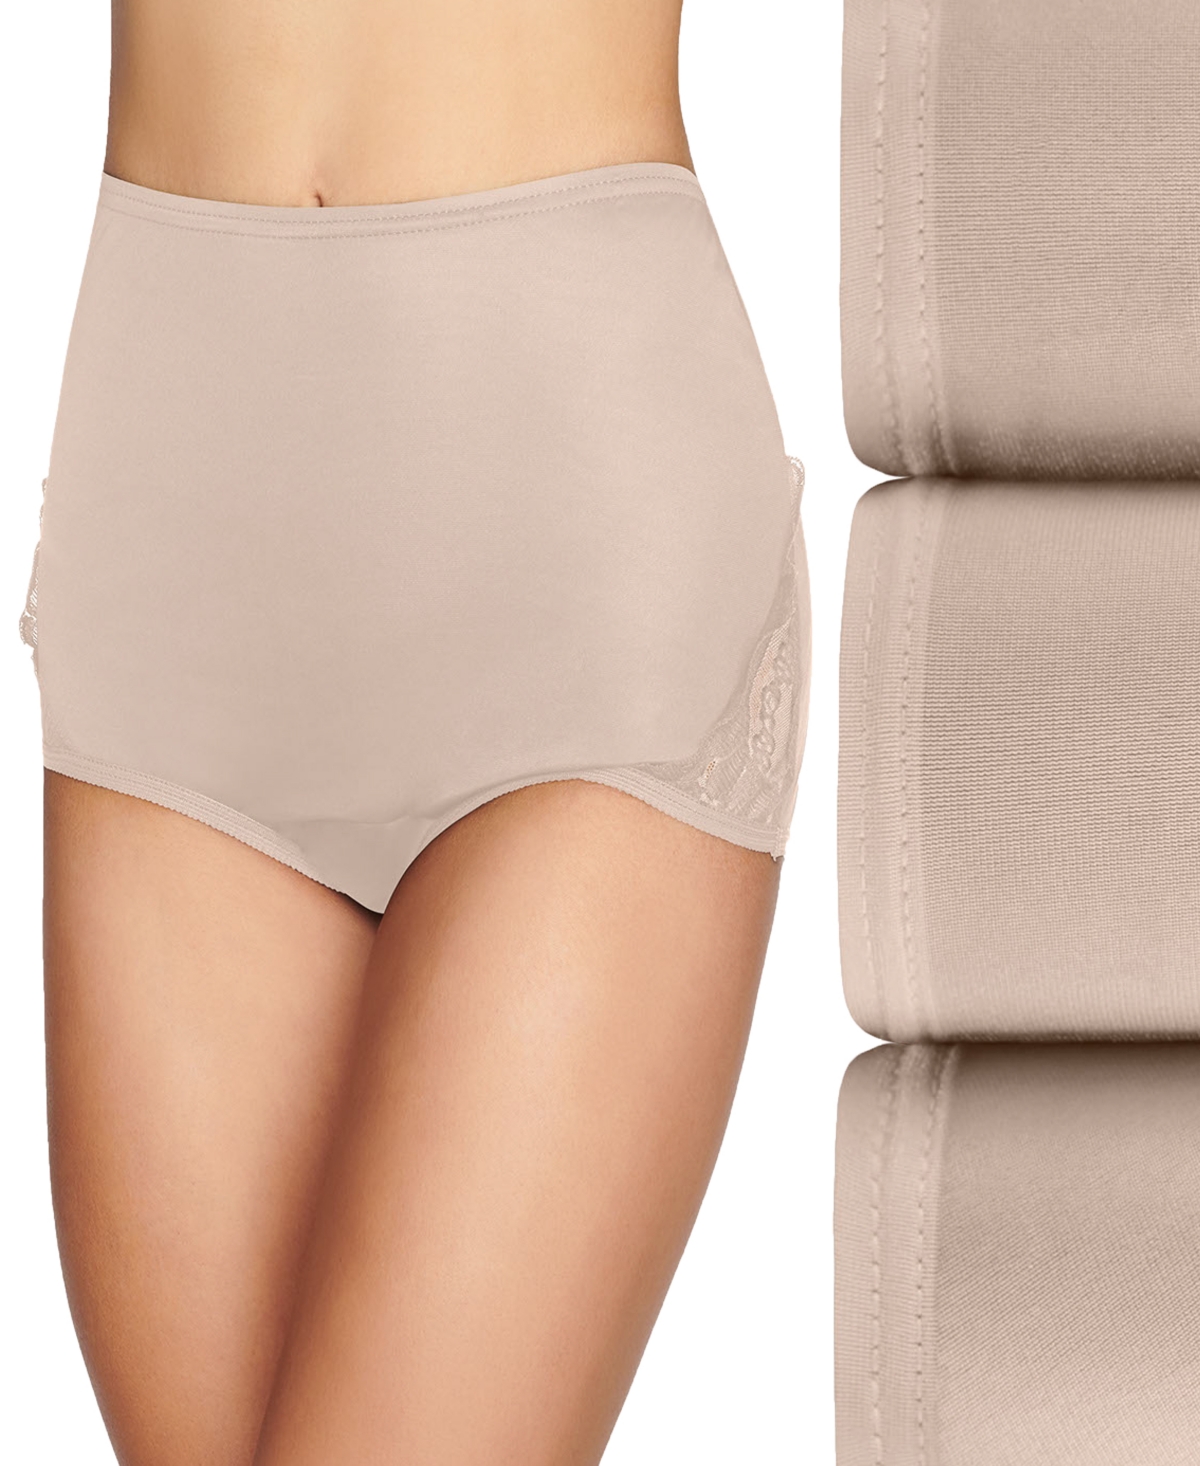 Women's 3-Pk. Lace Nouveau Brief Underwear 13011 - Morning Rain, Fawn, White